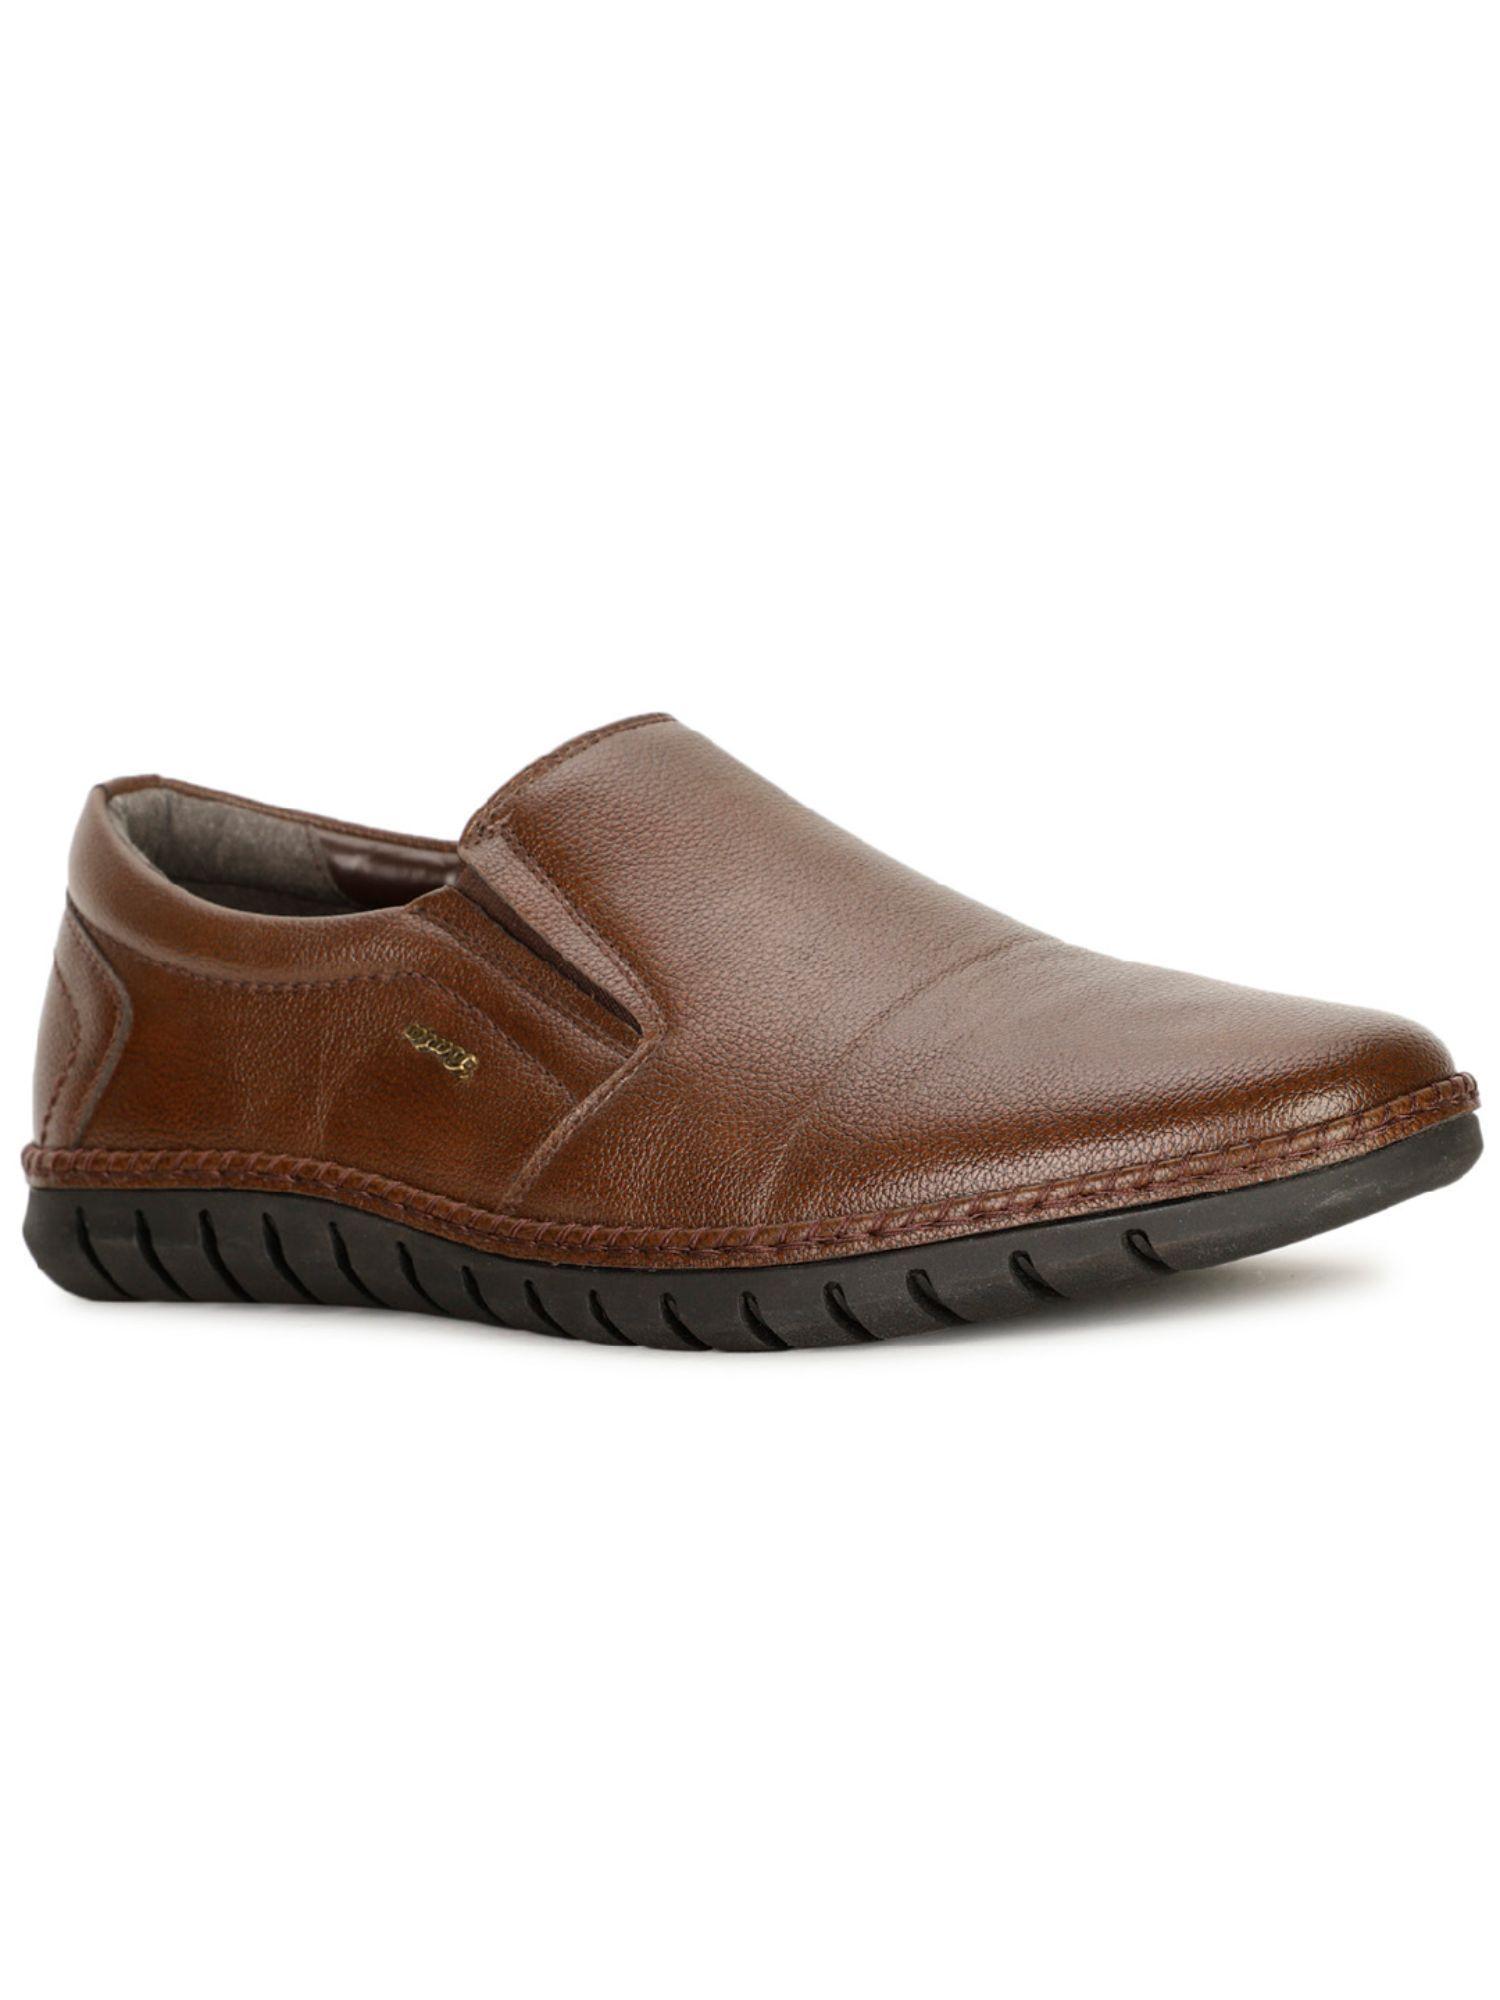 mens-brown-slip-on-formal-loafers